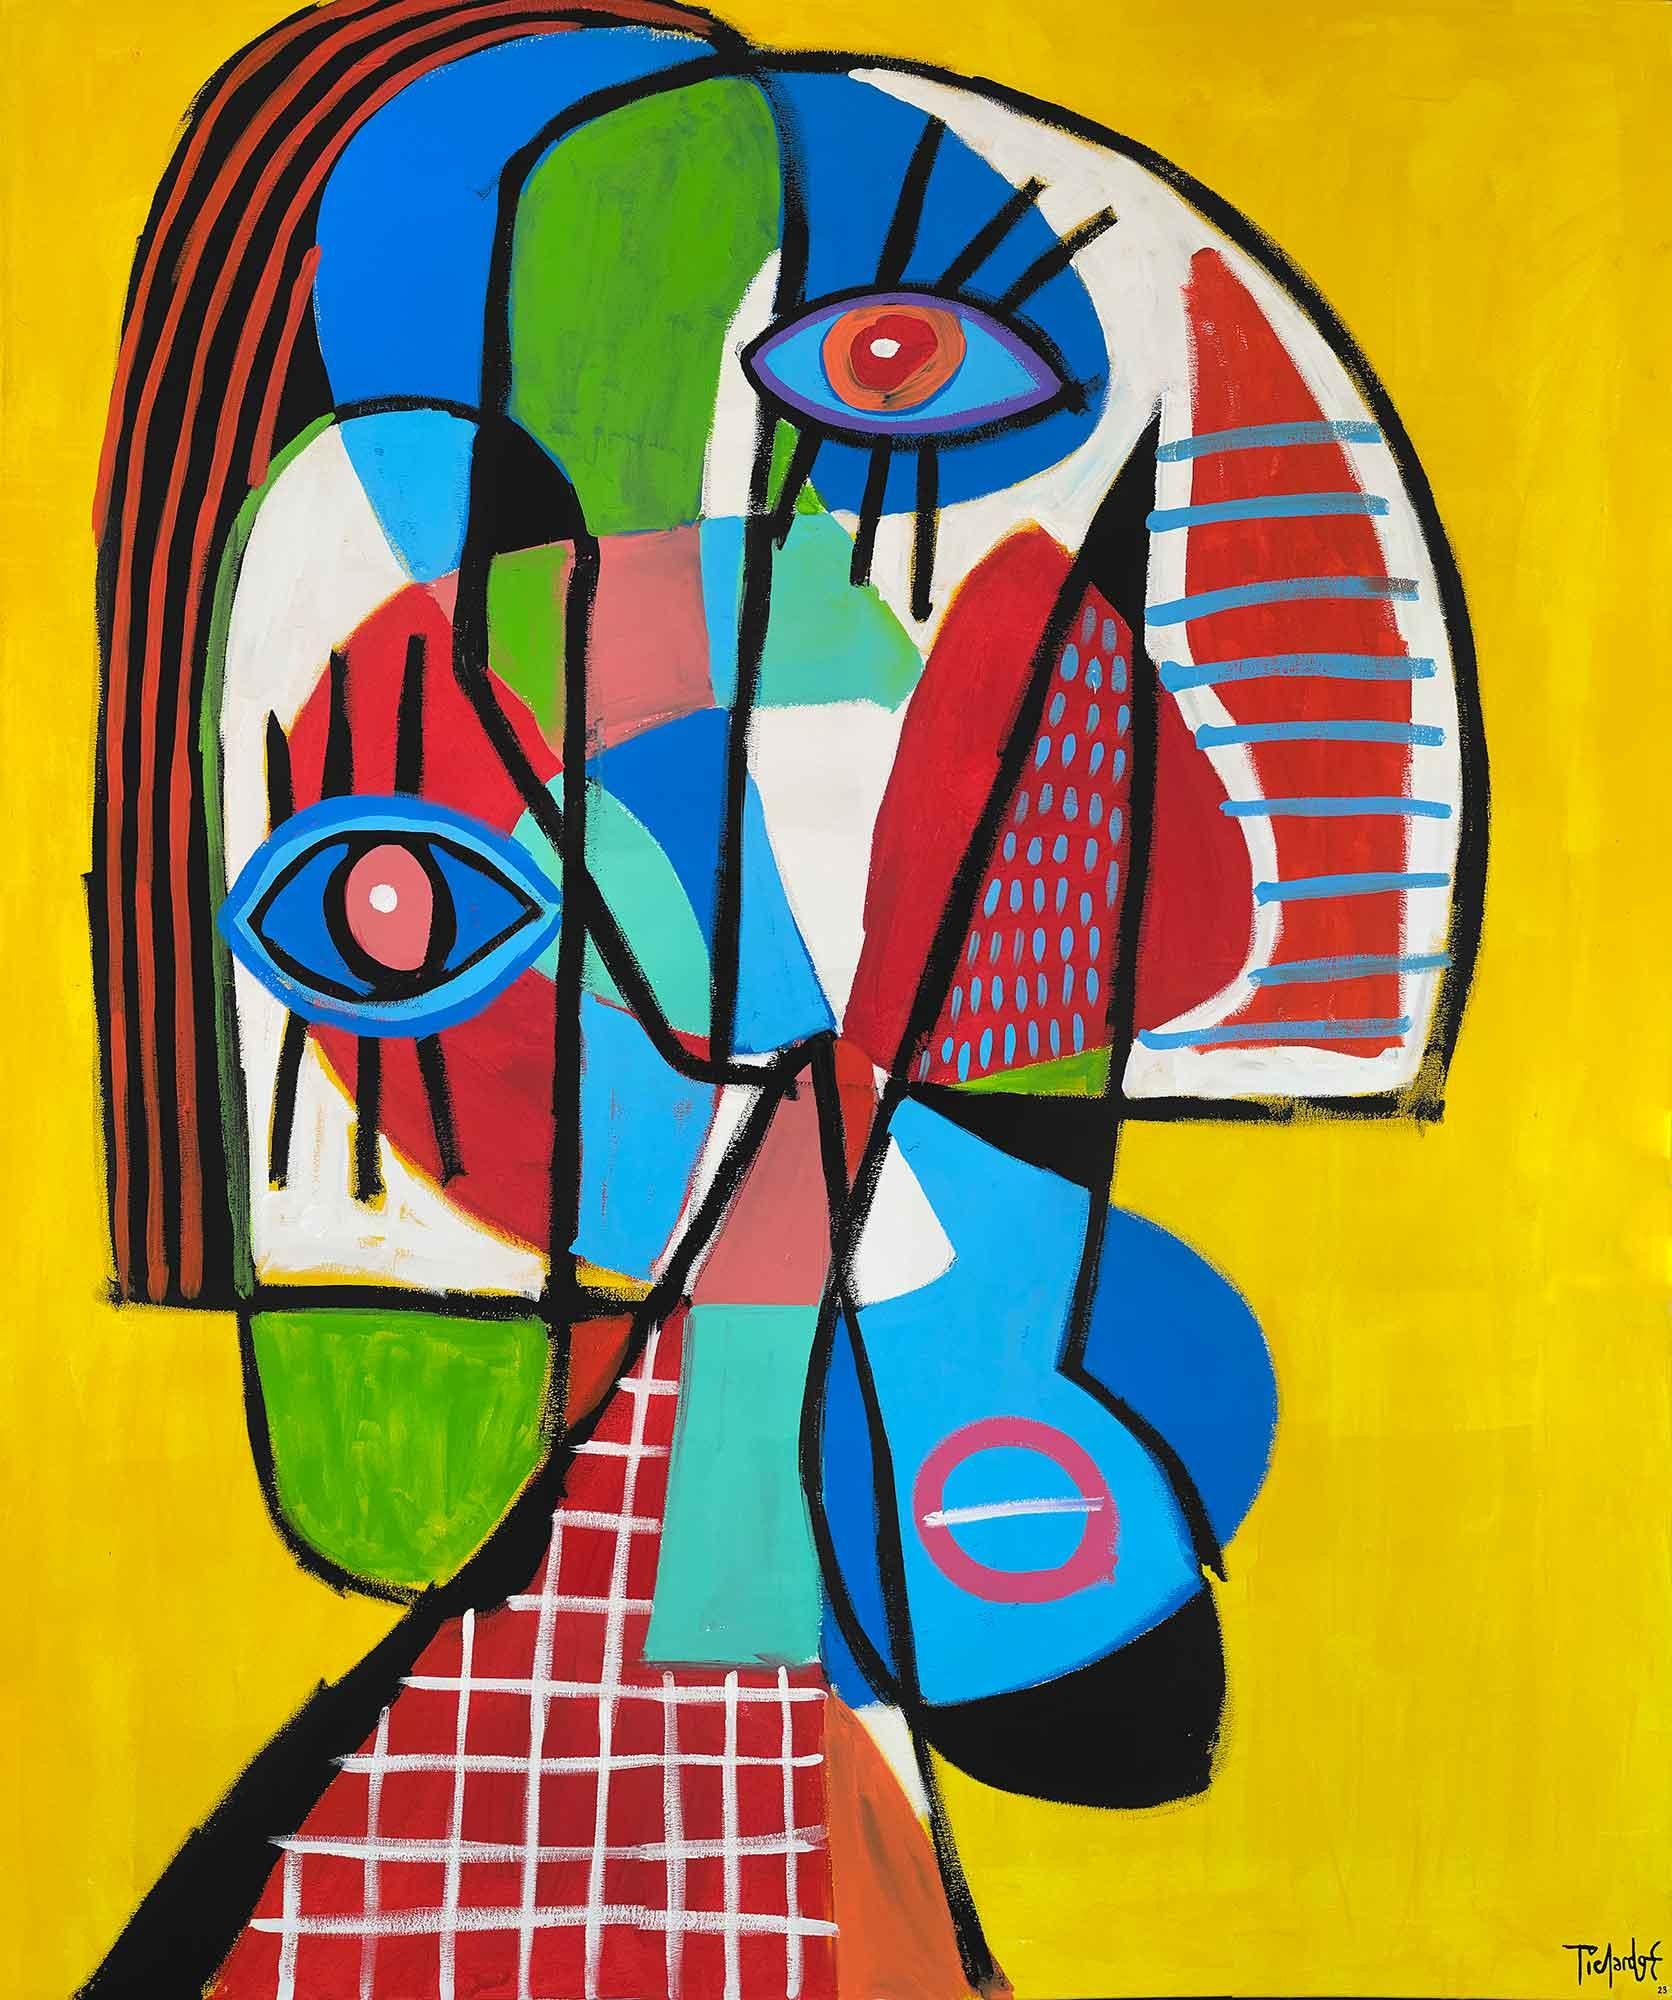 Contemporary Art, Abstract Painting
Acrylic on canvas
183x153cm
Signed 




About the artist
Enrique Pichardo (Mexico City, 1973) graduated from Escuela Nacional de Pintura, Escultura y Grabado (ENPEG) “La Esmeralda”. As a Mexican Contemporary